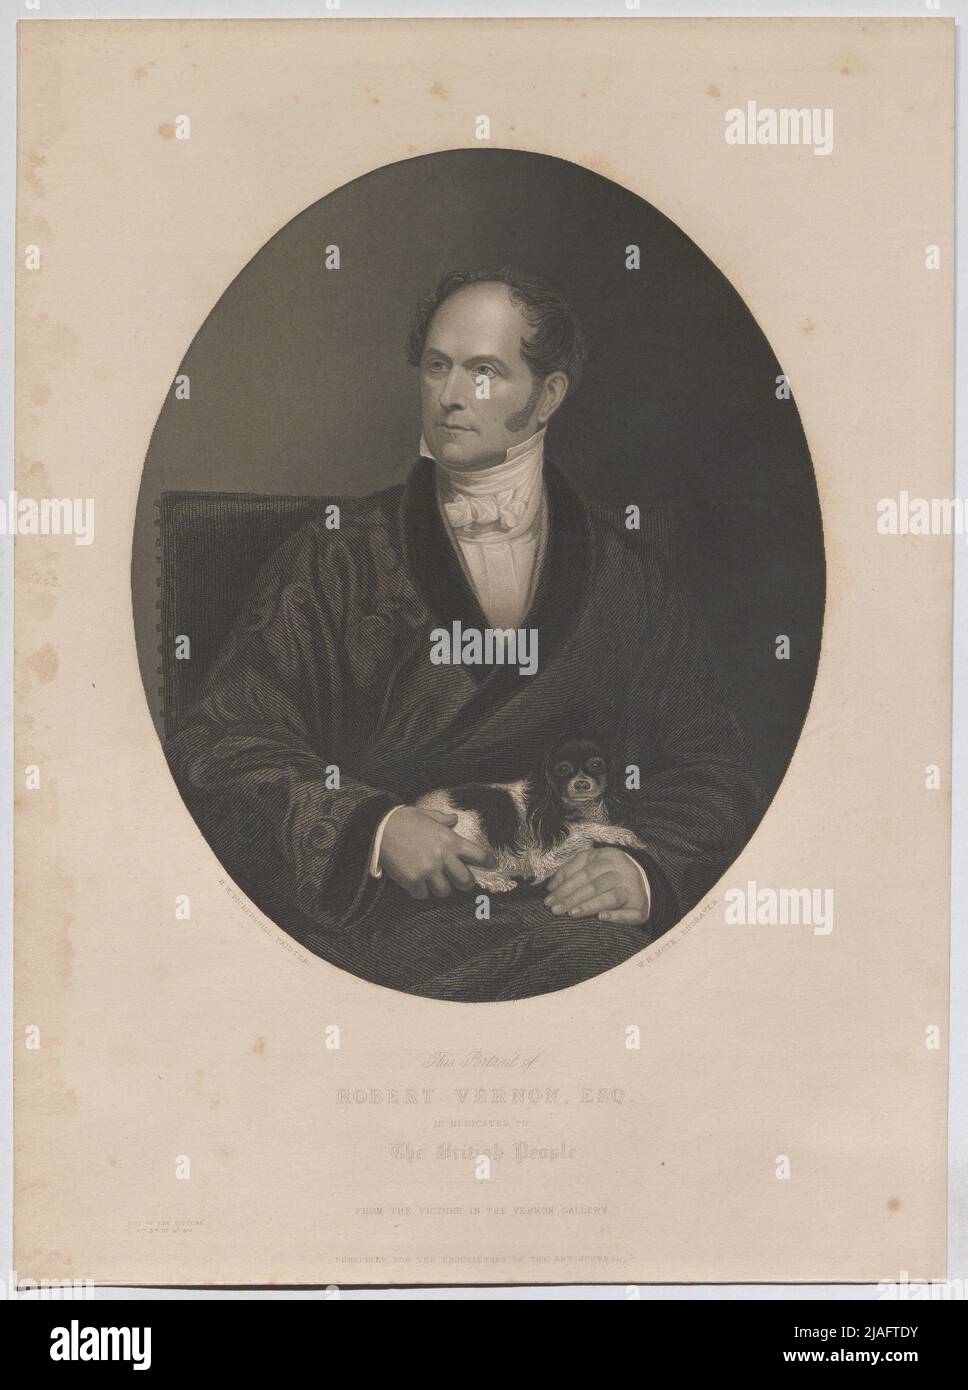 This Portrait of ROBERT VERNON, ESQ. is dedicated to the British People.'. Robert Vernon, britischer Patron und Kunstsammler. William Henry Mote (1803—1871), copper engraver Stock Photo